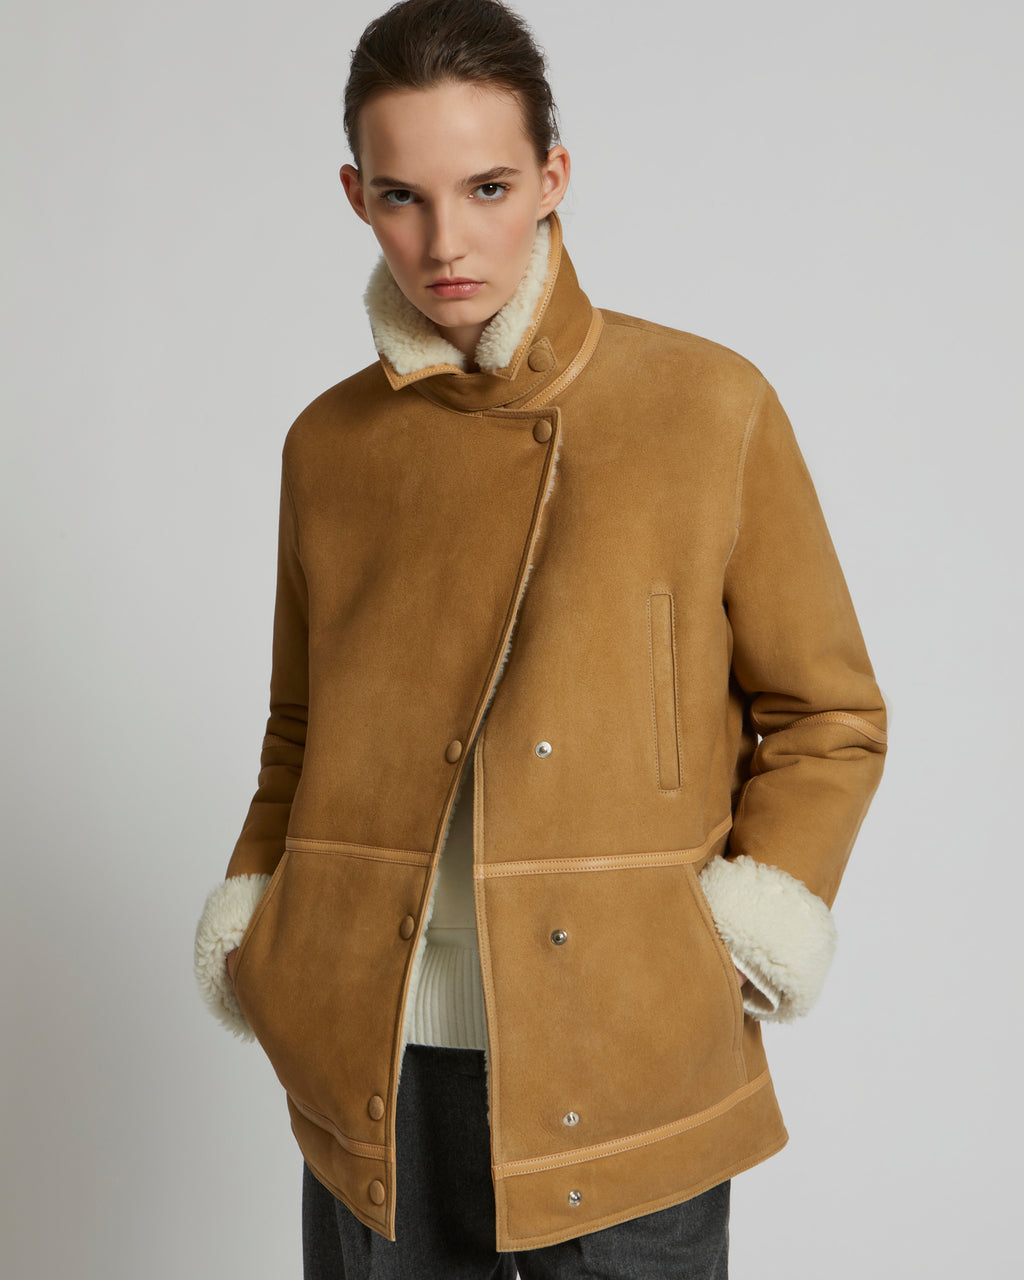 brown jacket Salomon Yves - Yves merino - US Long – Salomon